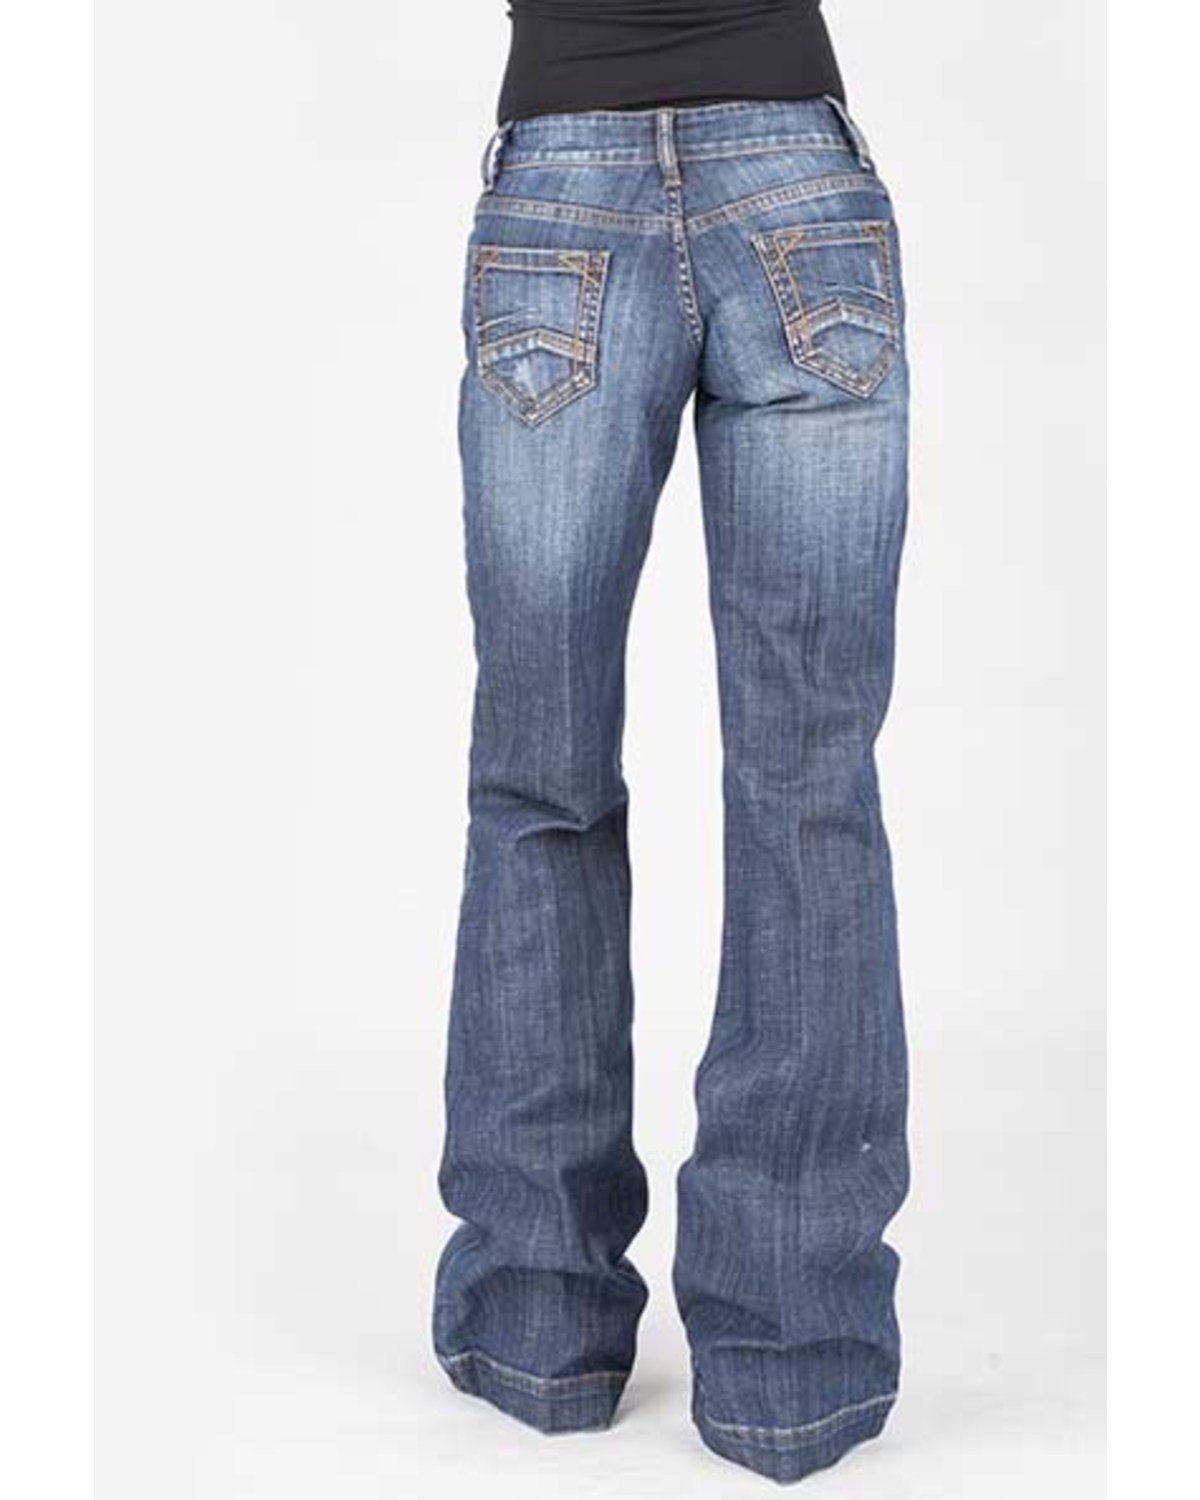 Stetson Women's 214 Trouser Fit Jeans | Boot Barn